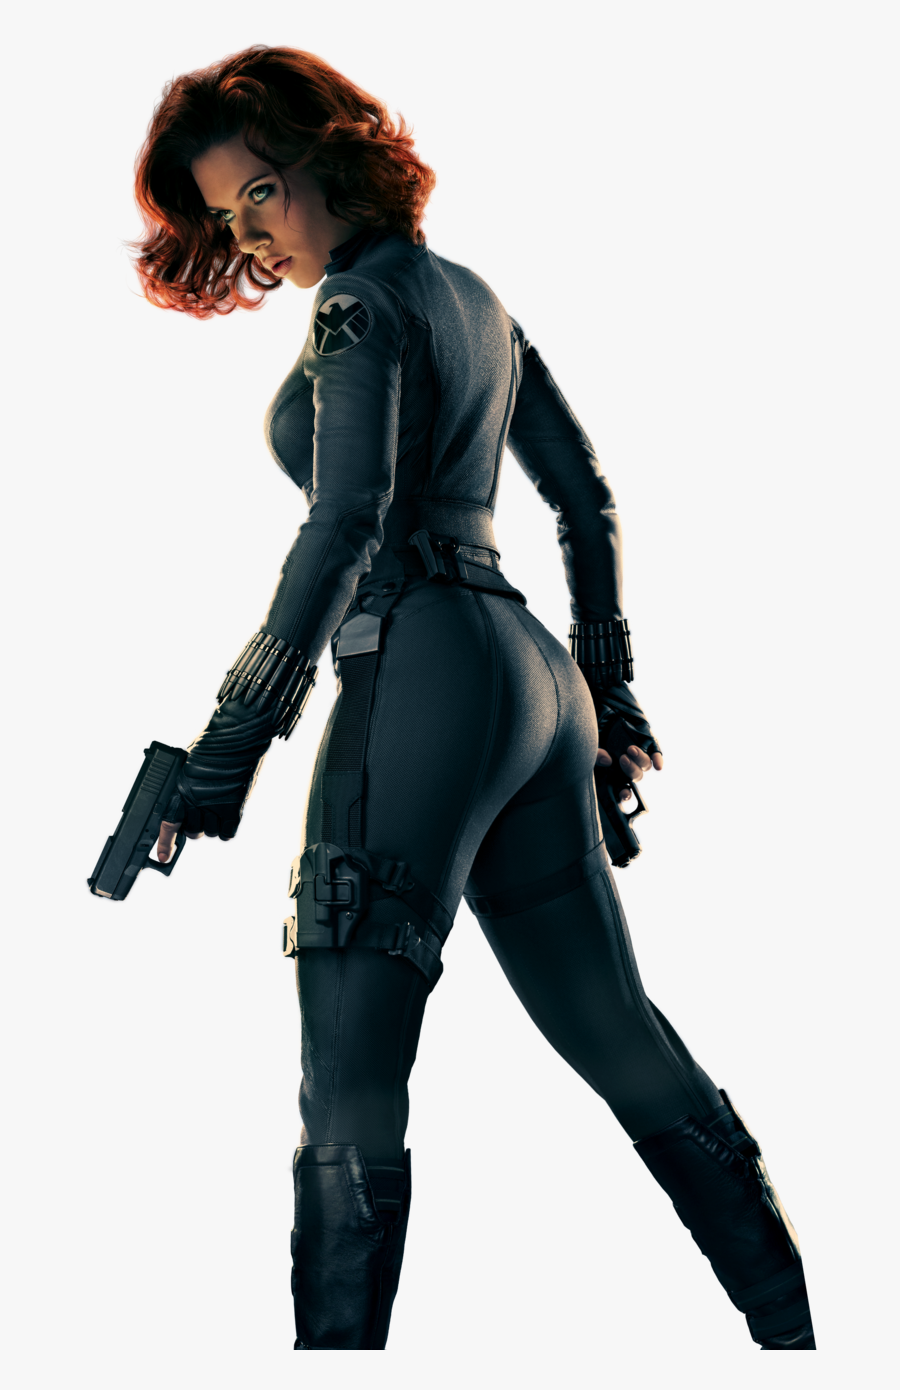 Black Widow Avengers Png, Transparent Clipart